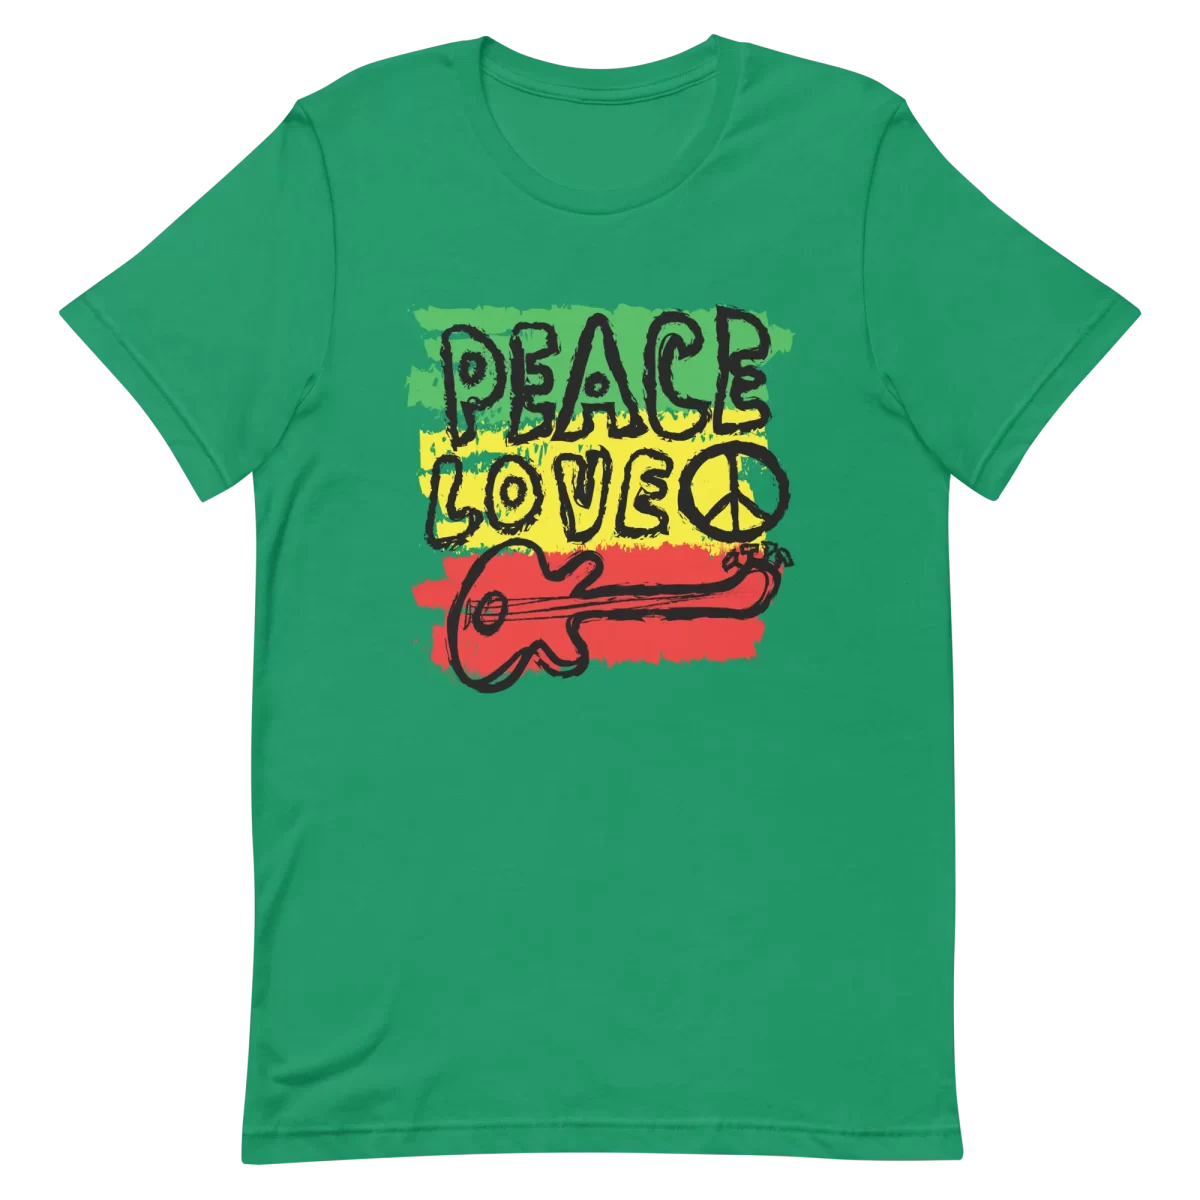 Unisex T-Shirt - Peace Love Music - Kelly